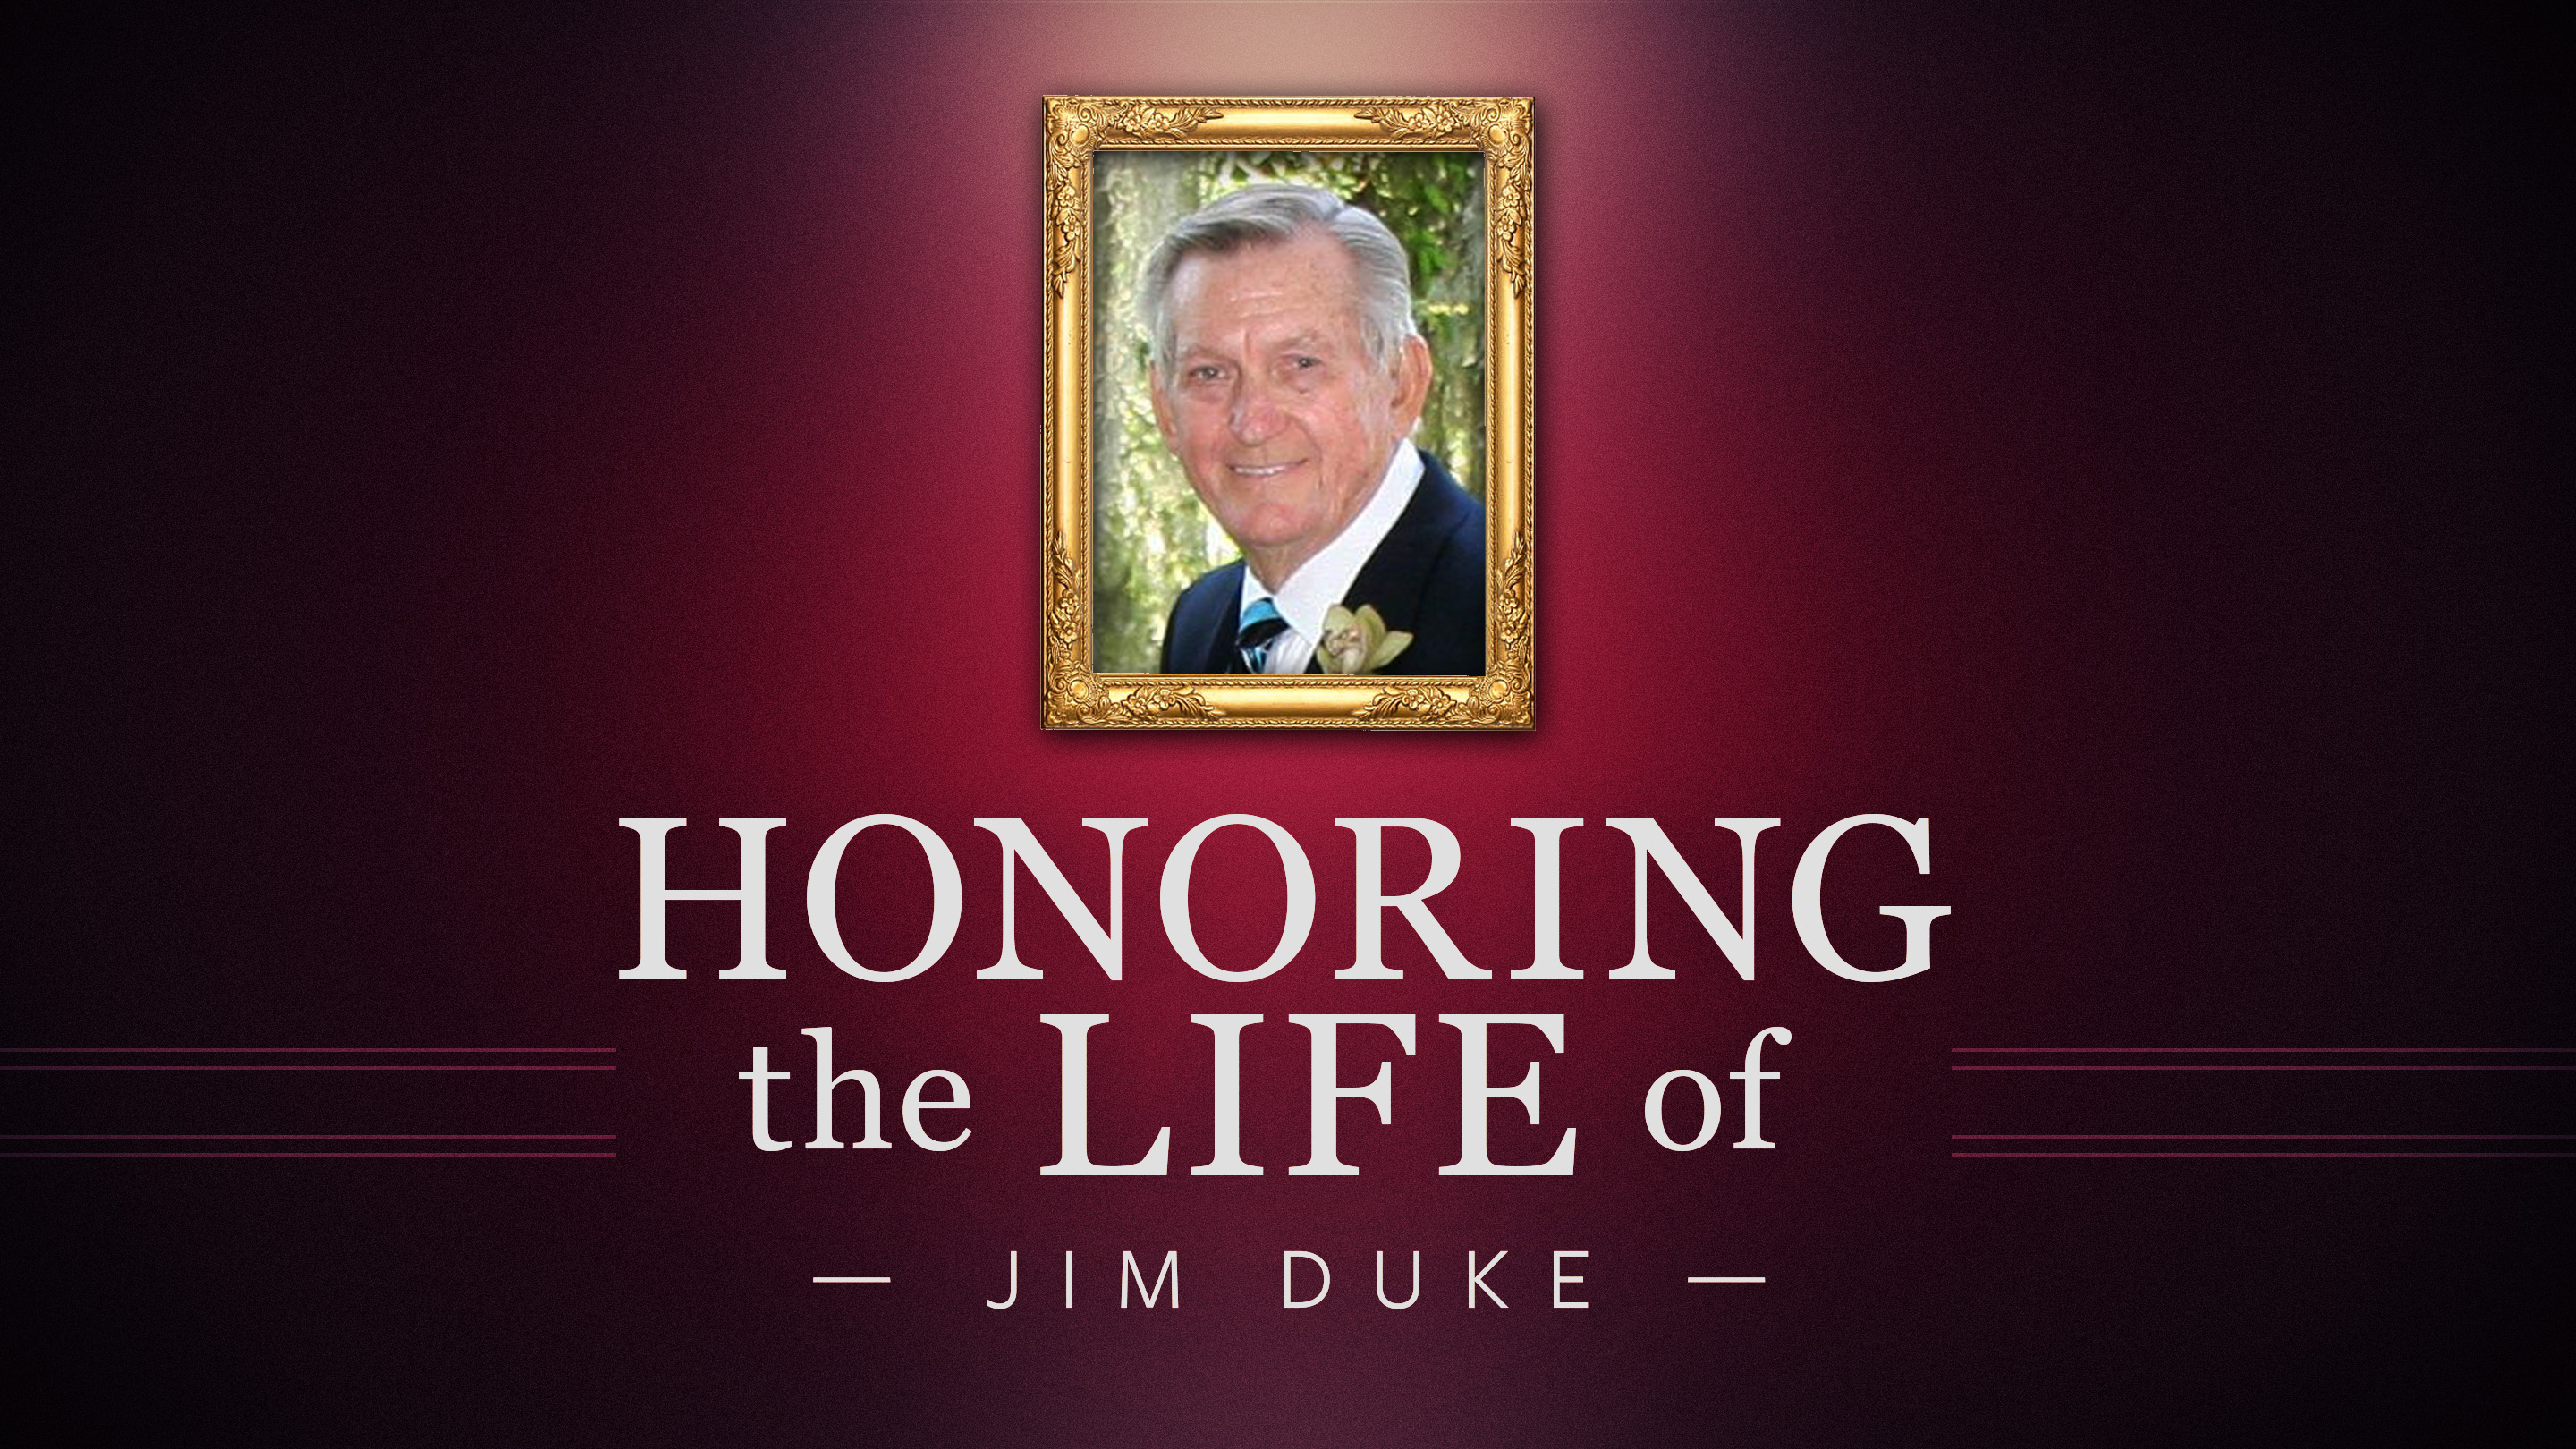 Jim Duke's Memorial Service